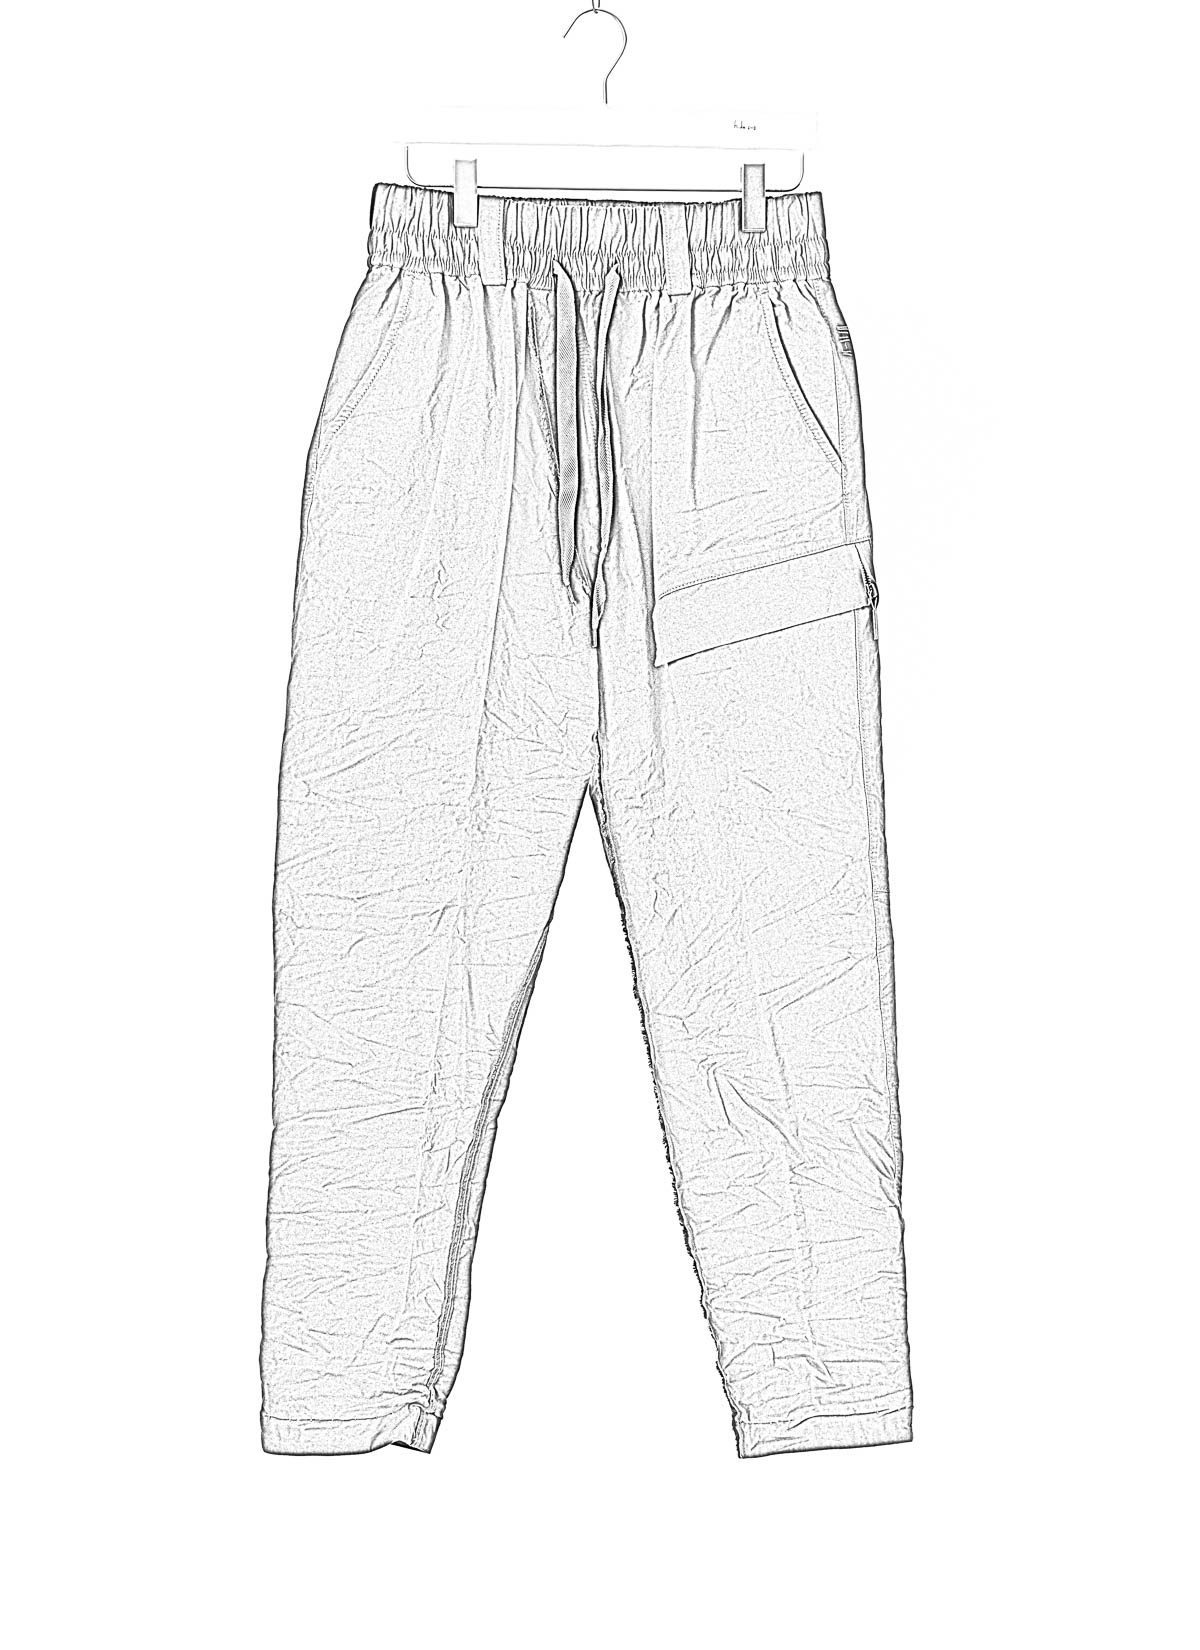 TAICHI MURAKAMI L-P L/C Pants Origami, dusty white, 3 layer nylon